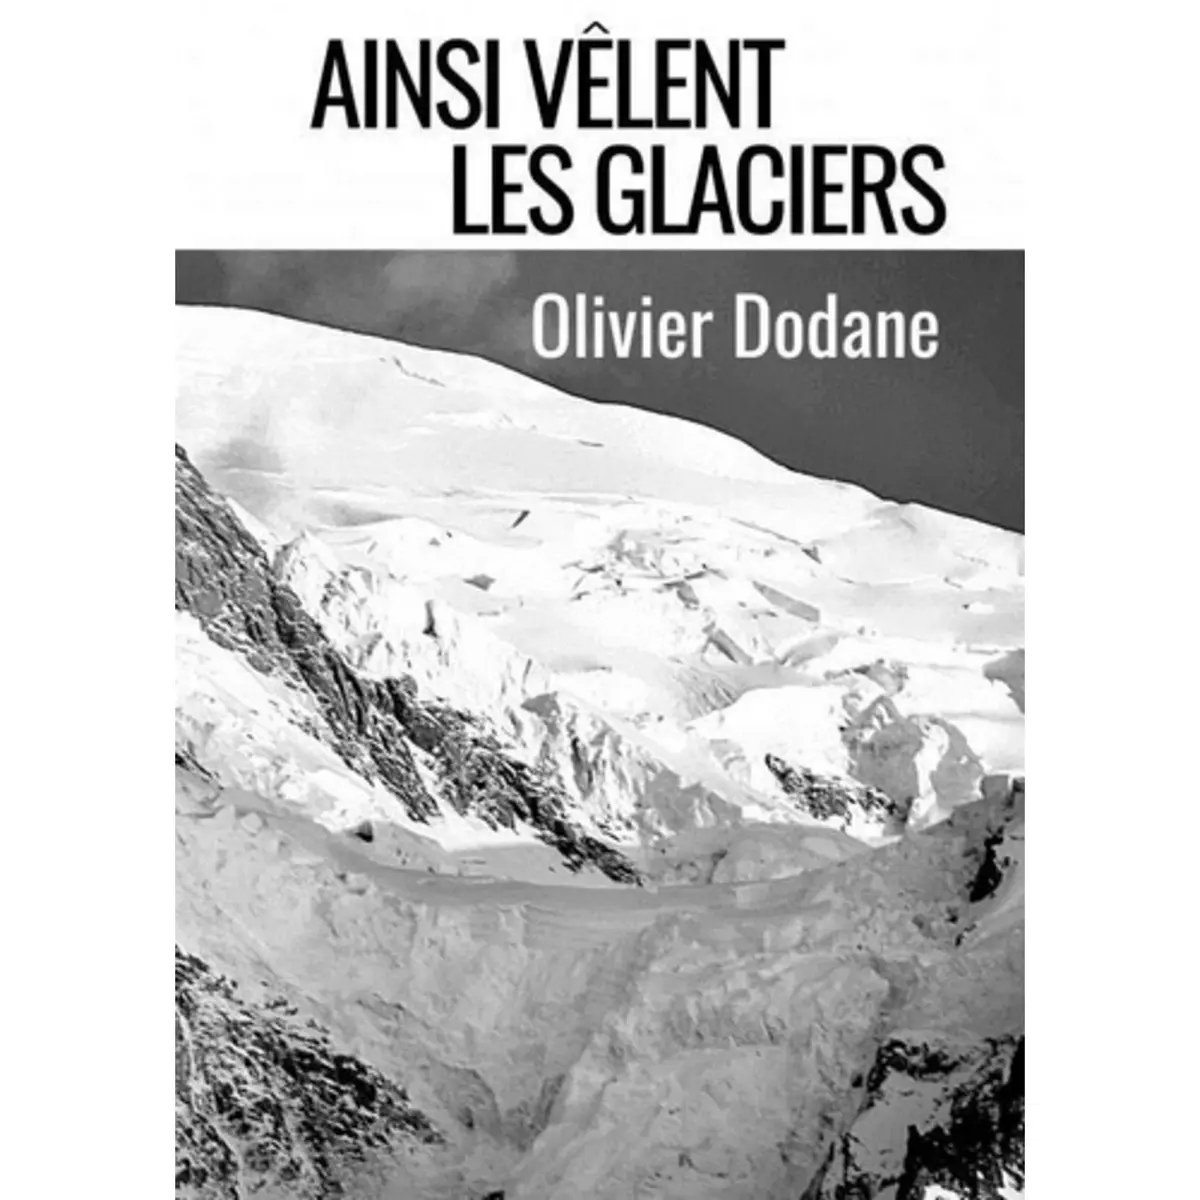  AINSI VELENT LES GLACIERS, Dodane Olivier